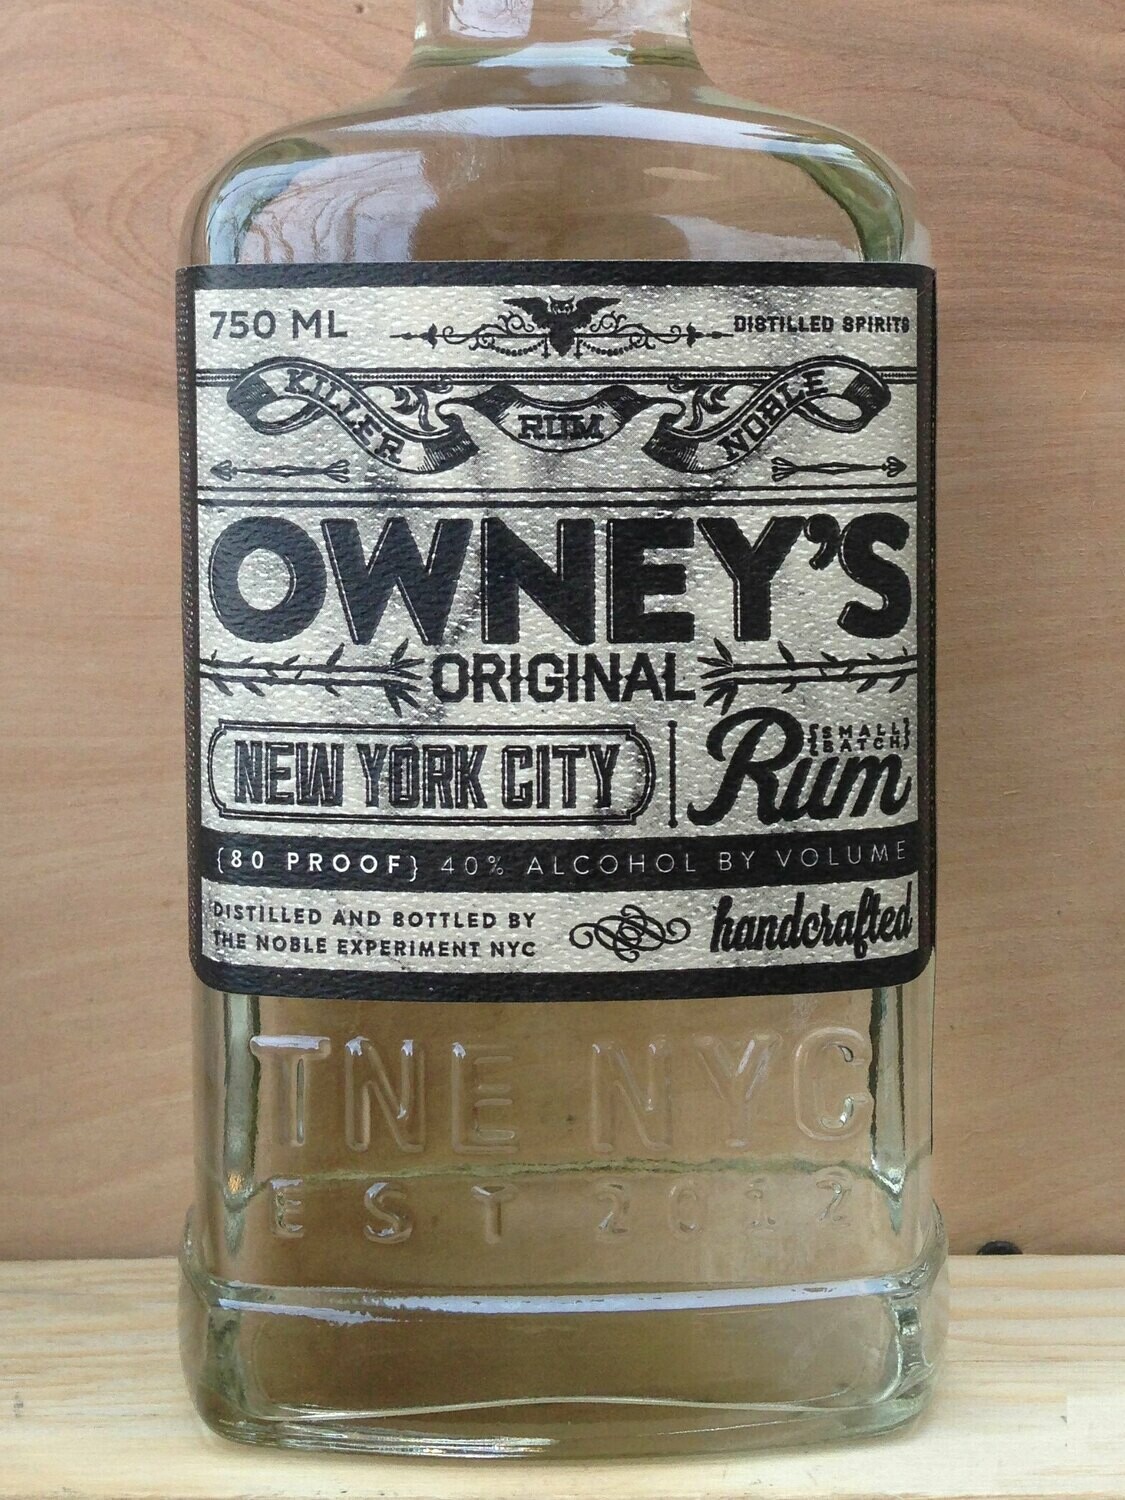 Owney's Original Small Batch Rum